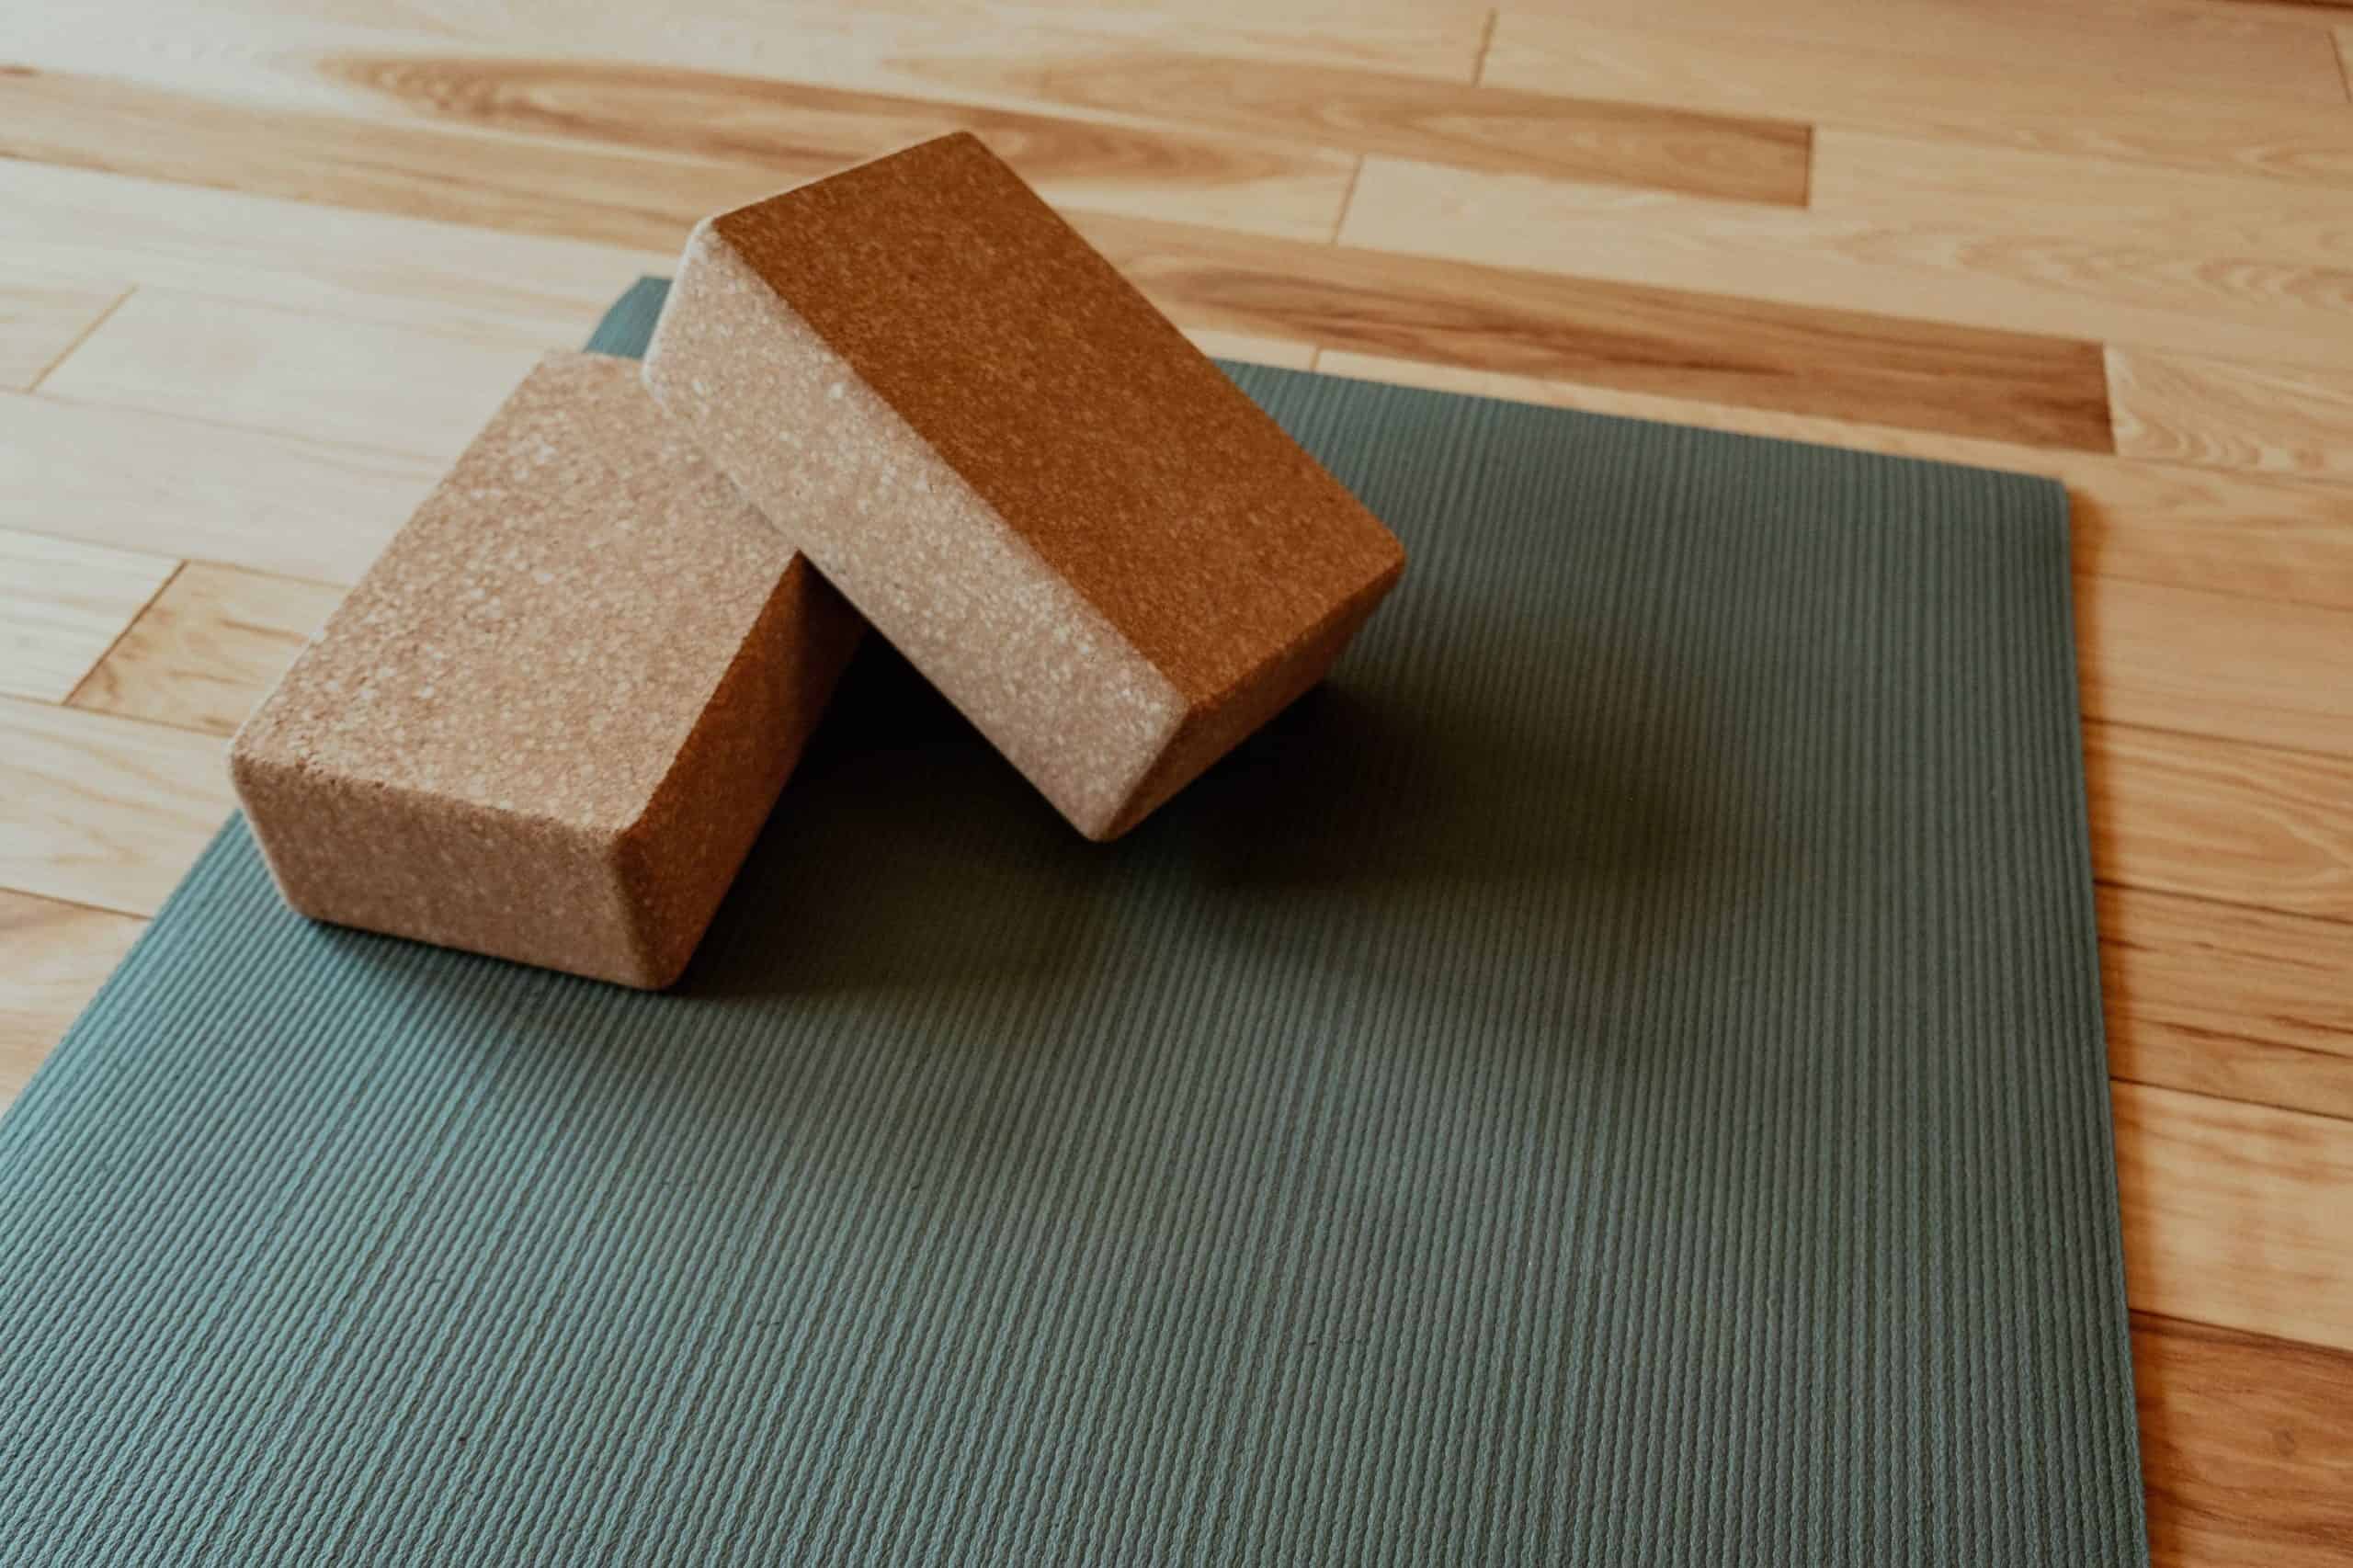 Zuda – How to Use Yoga Blocks